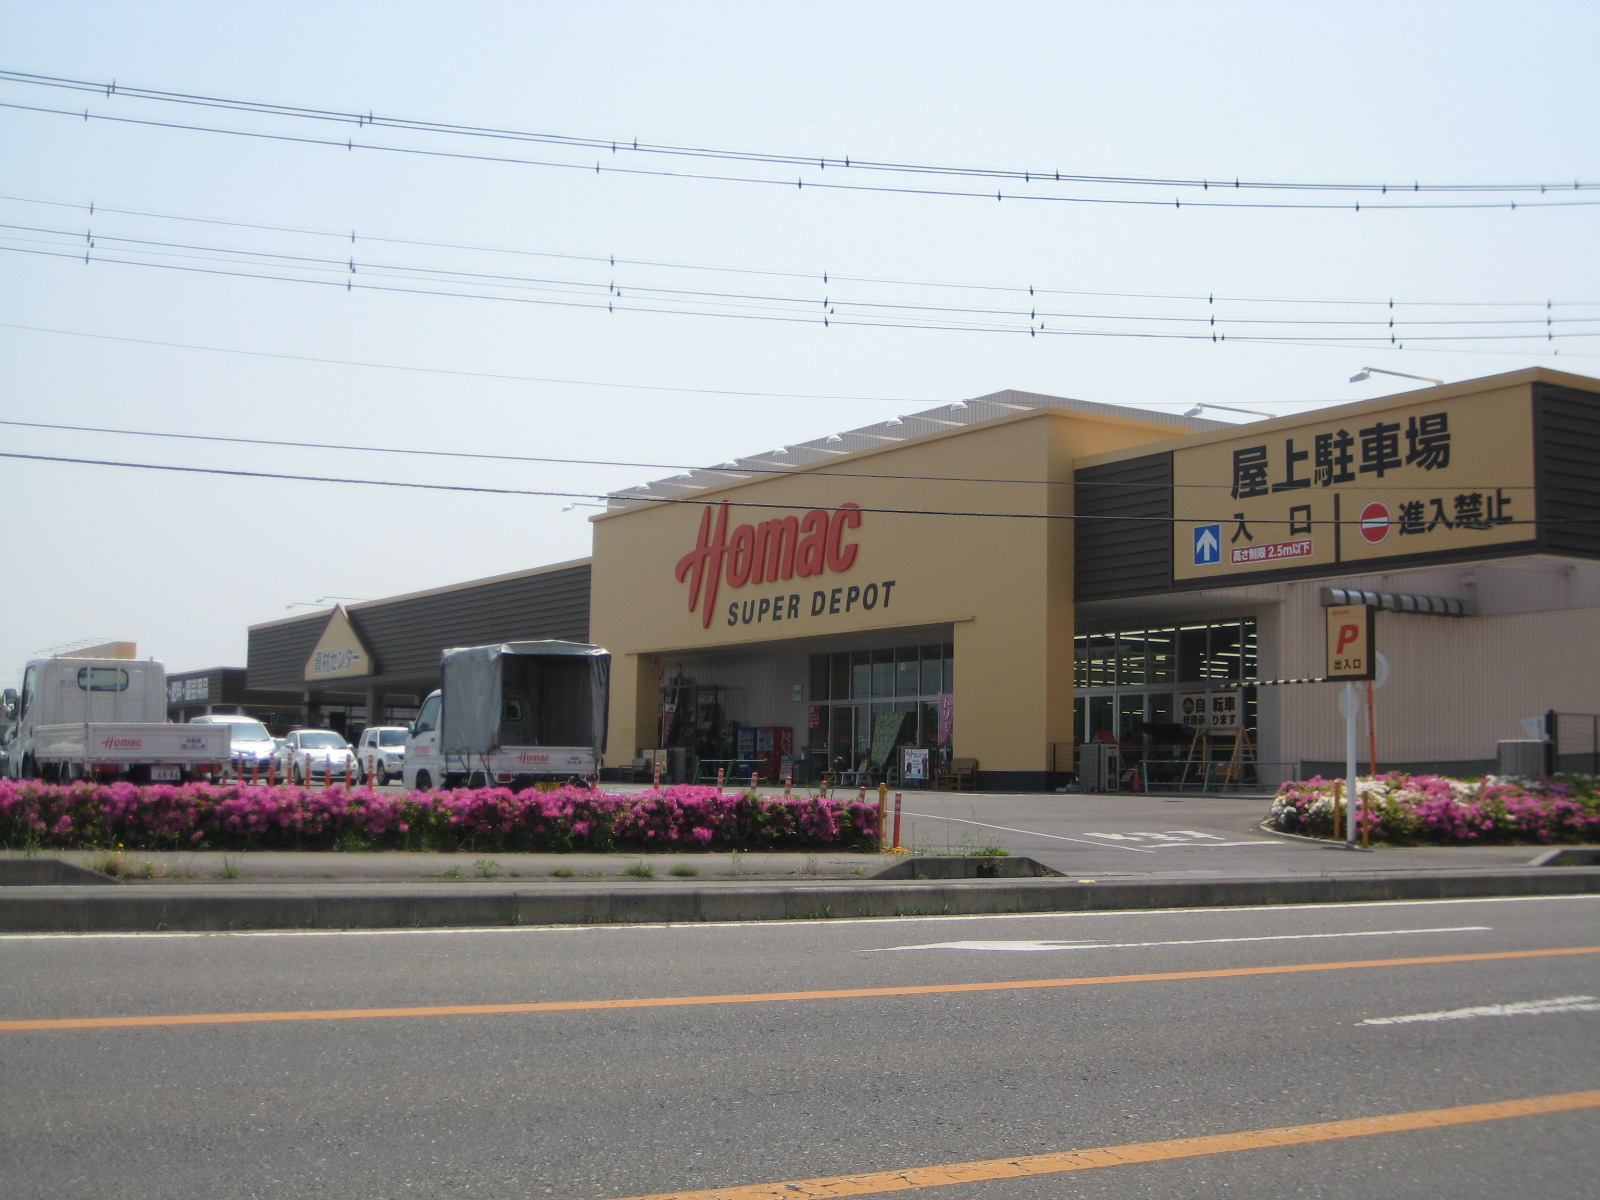 Home center. Homac Corporation super depot Hitachinoushiku store up (home improvement) 1100m